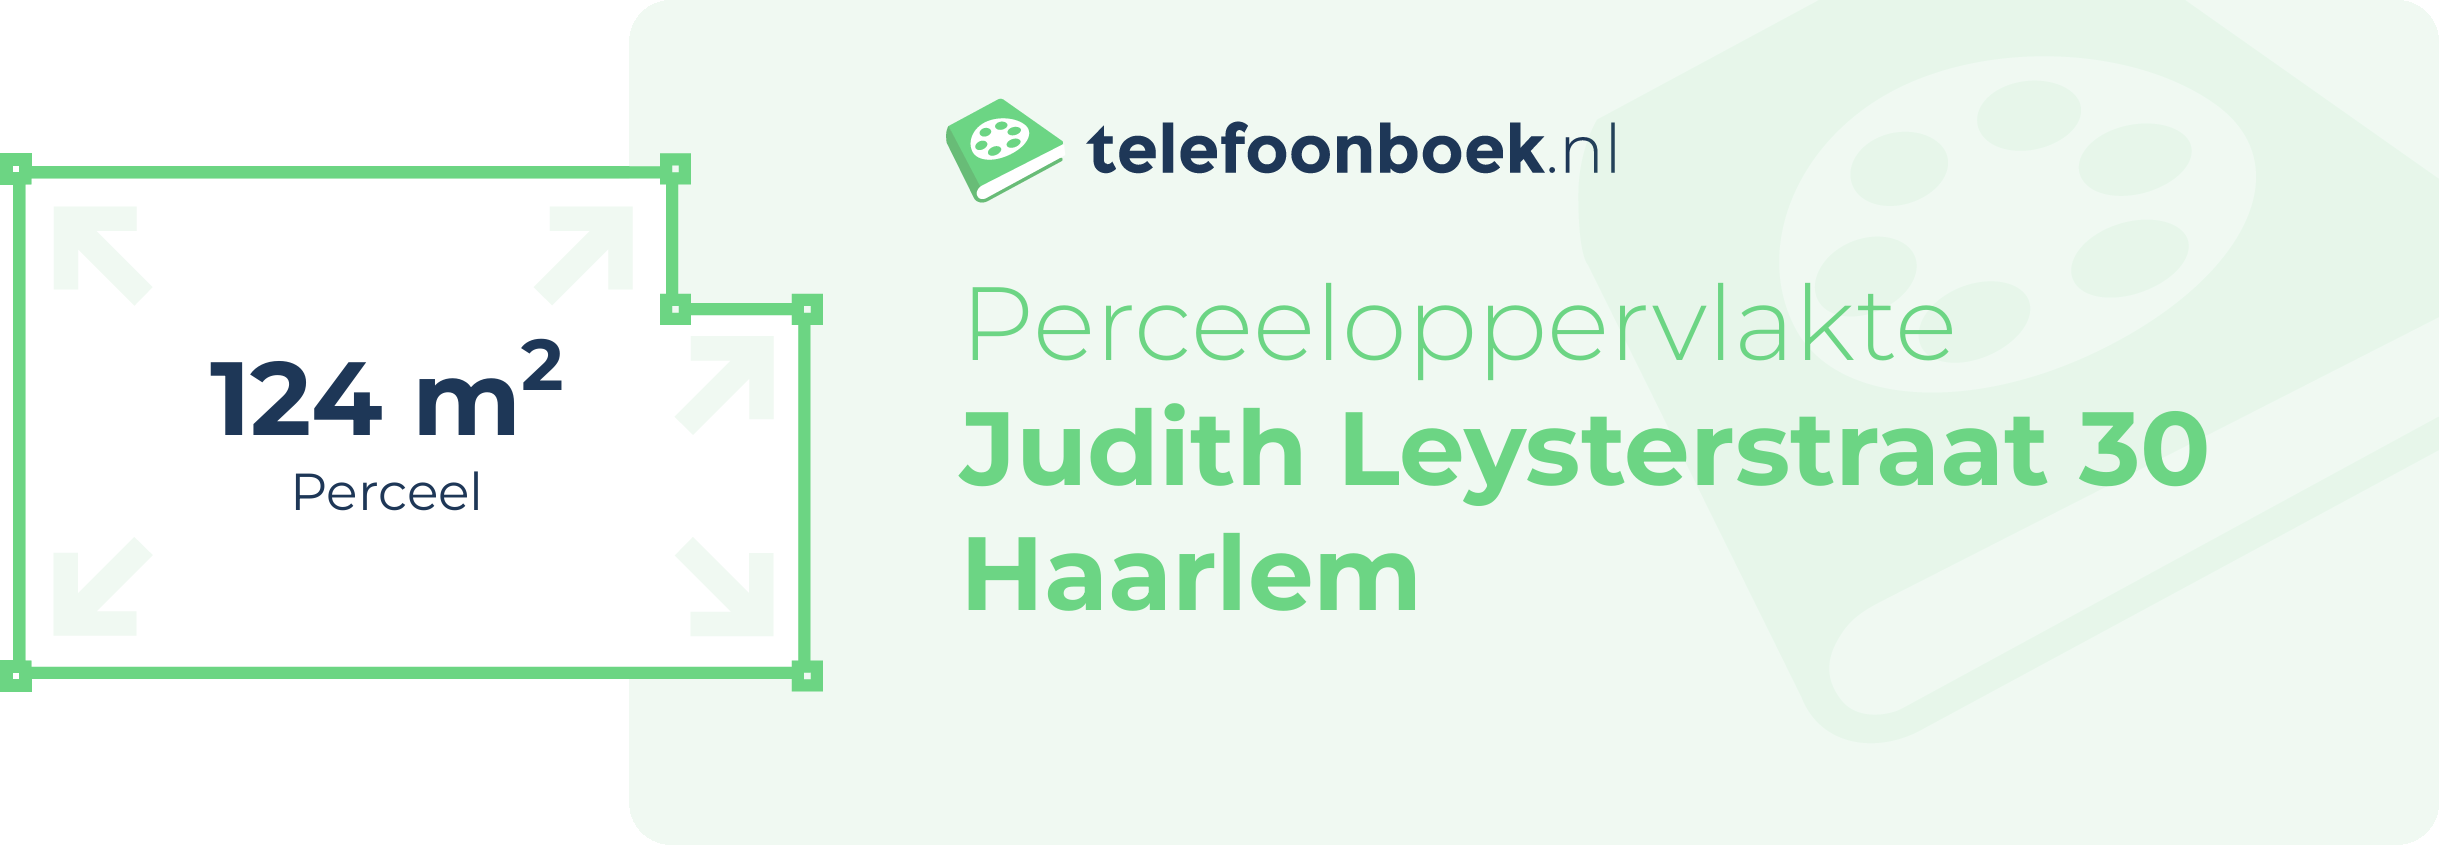 Perceeloppervlakte Judith Leysterstraat 30 Haarlem